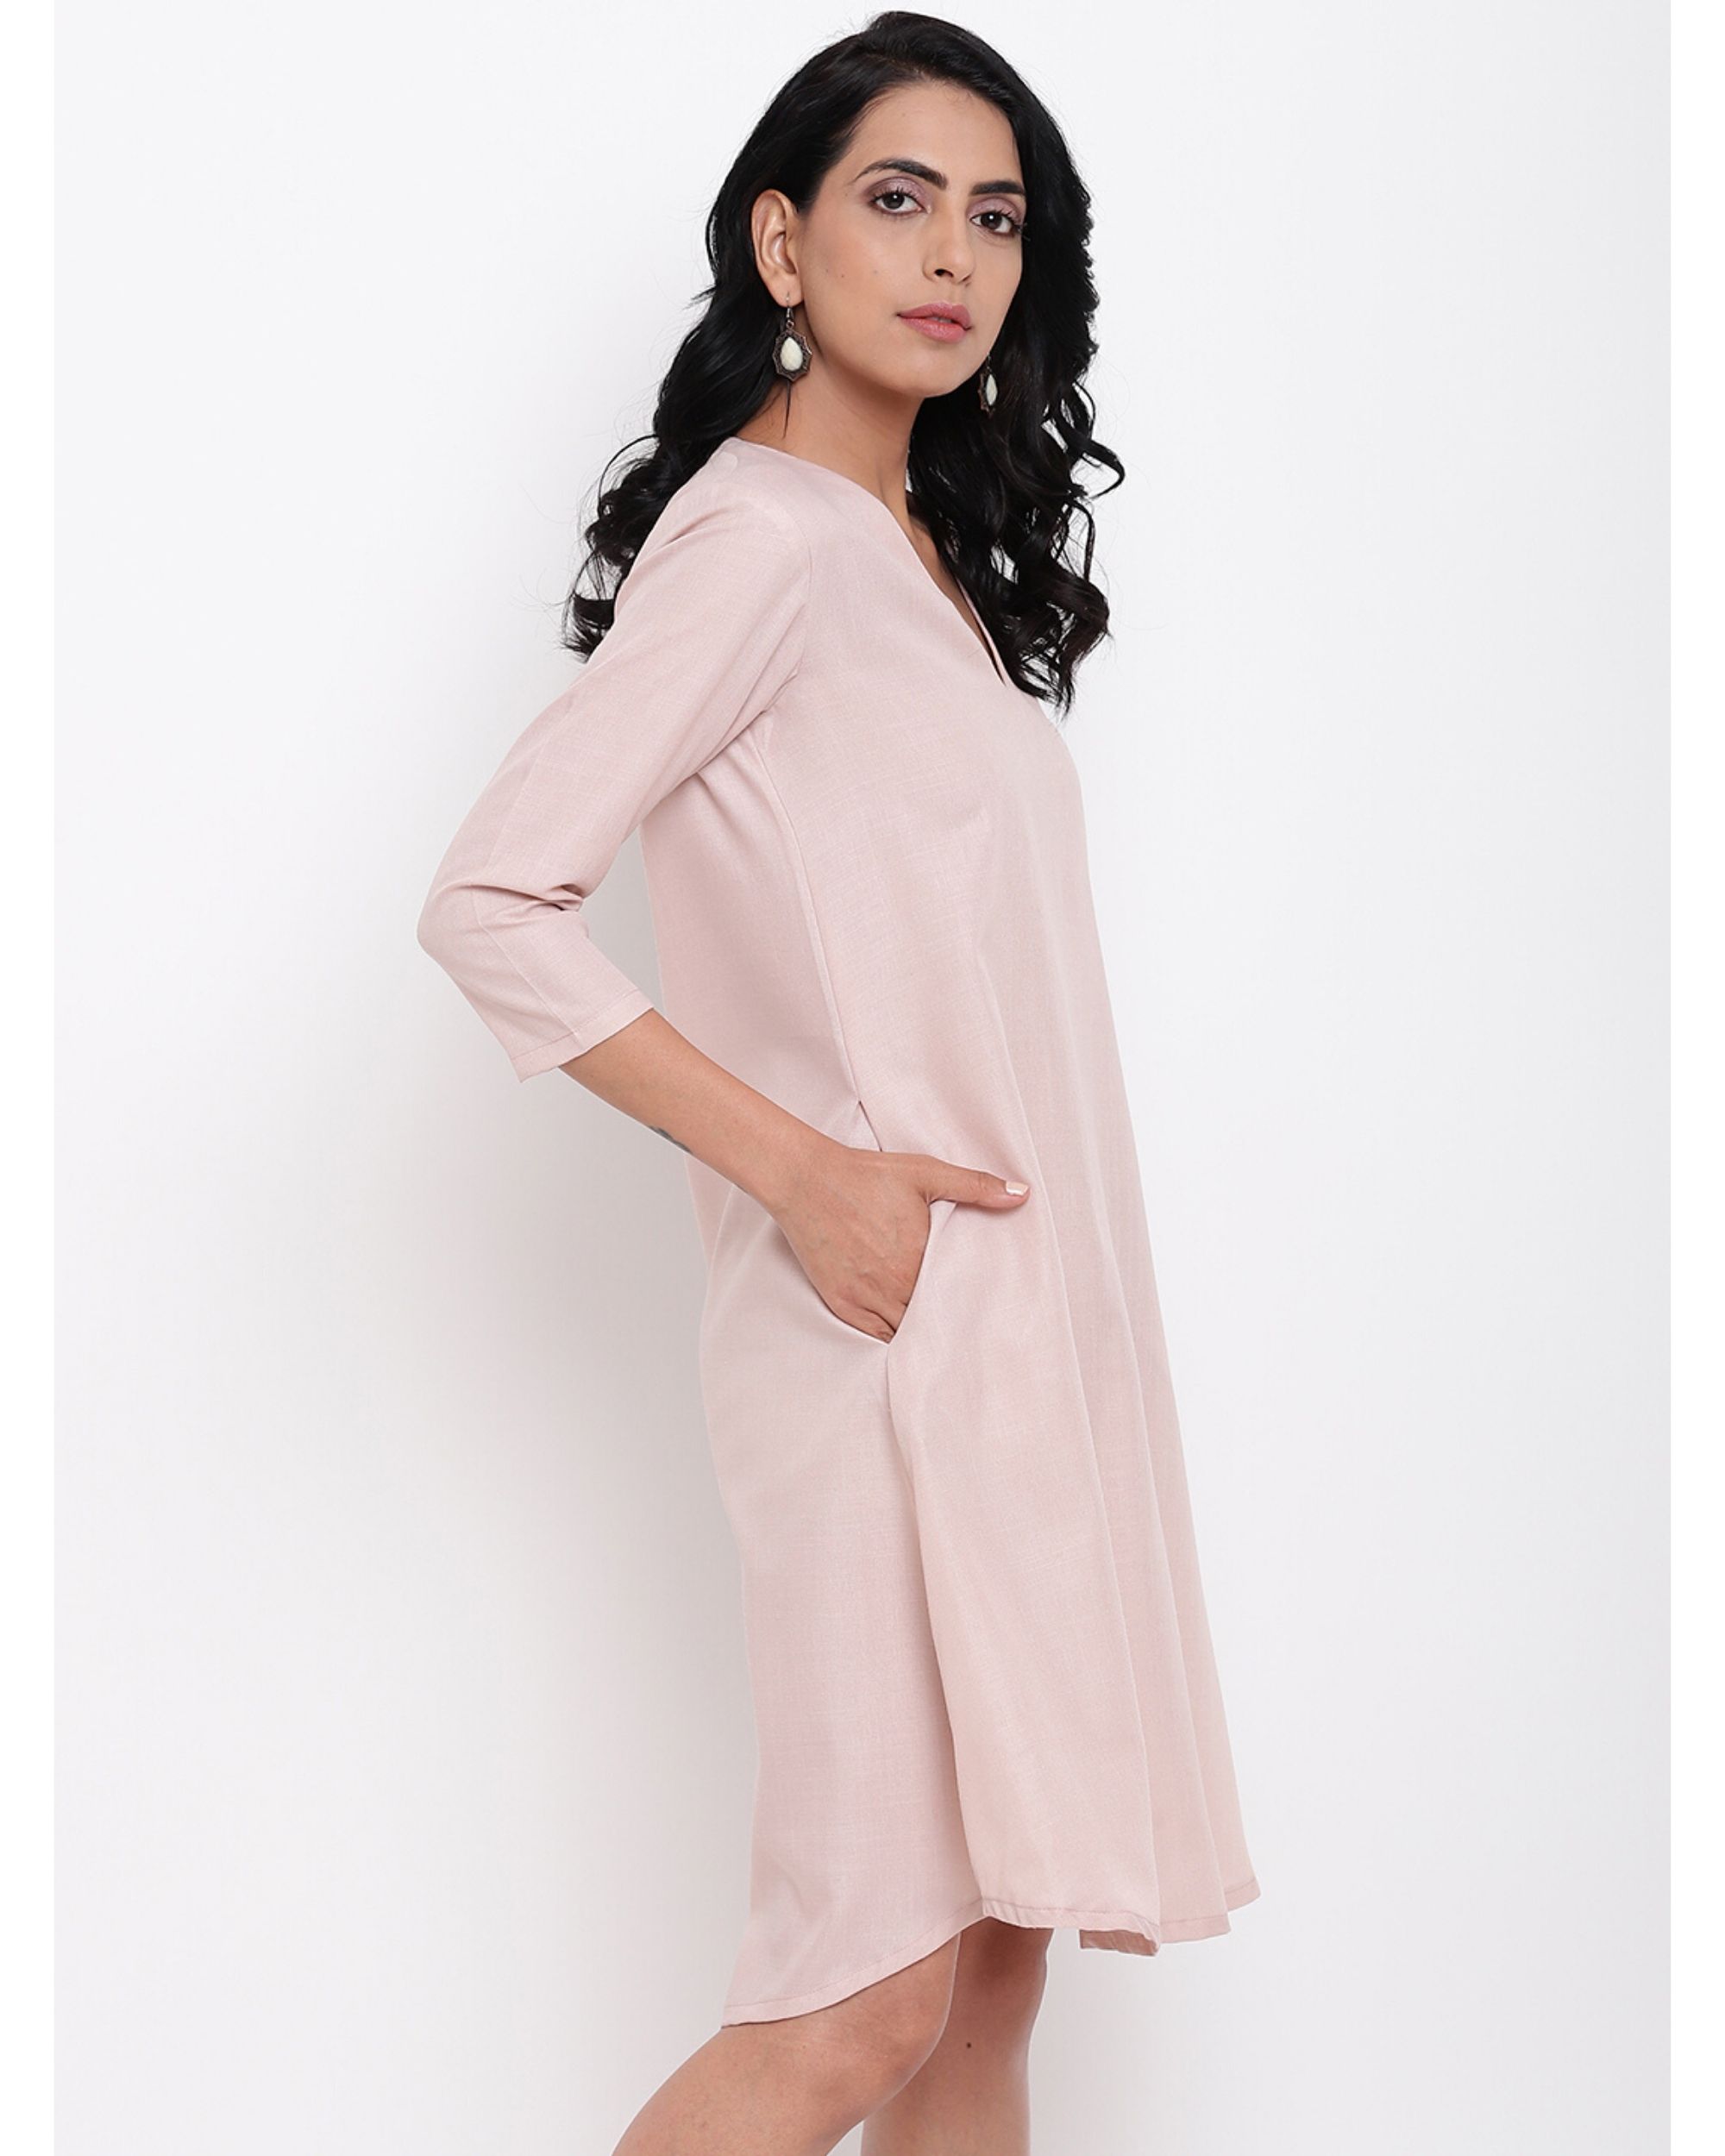 Blush pink cotton linen dress by trueBrowns | The Secret Label